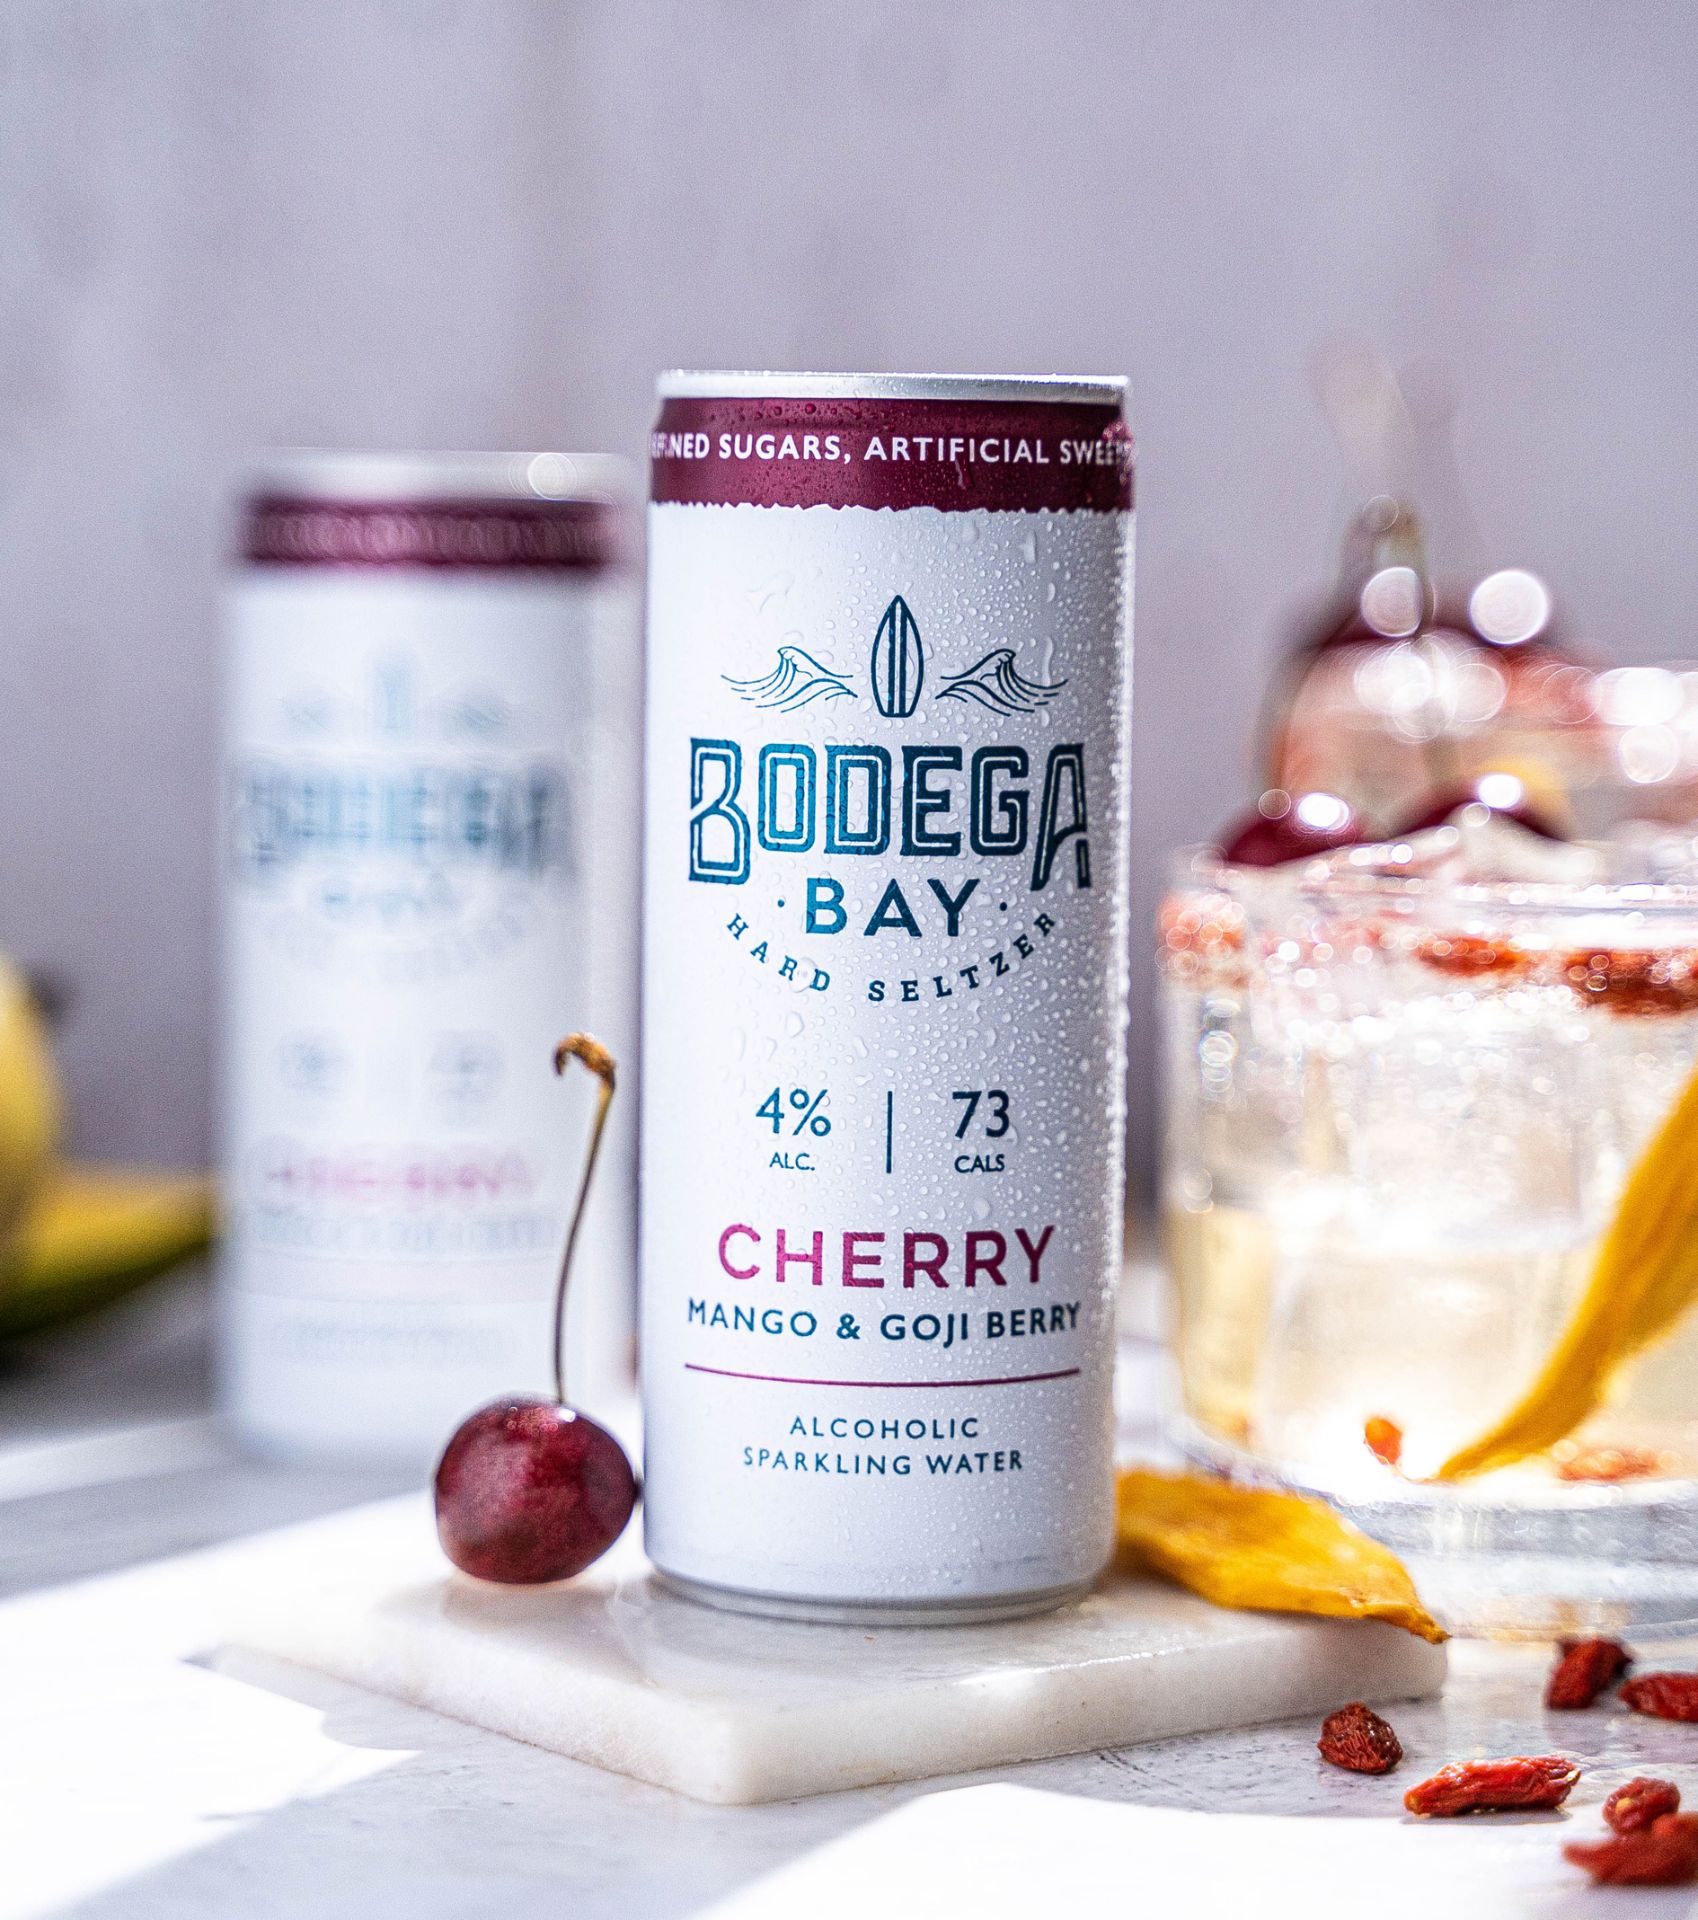 24 x Bodega Bay Hard Seltzer 250ml Alcoholic Sparkling Water Drinks - Cherry Mango & Goji Berry - 4% - Image 7 of 7